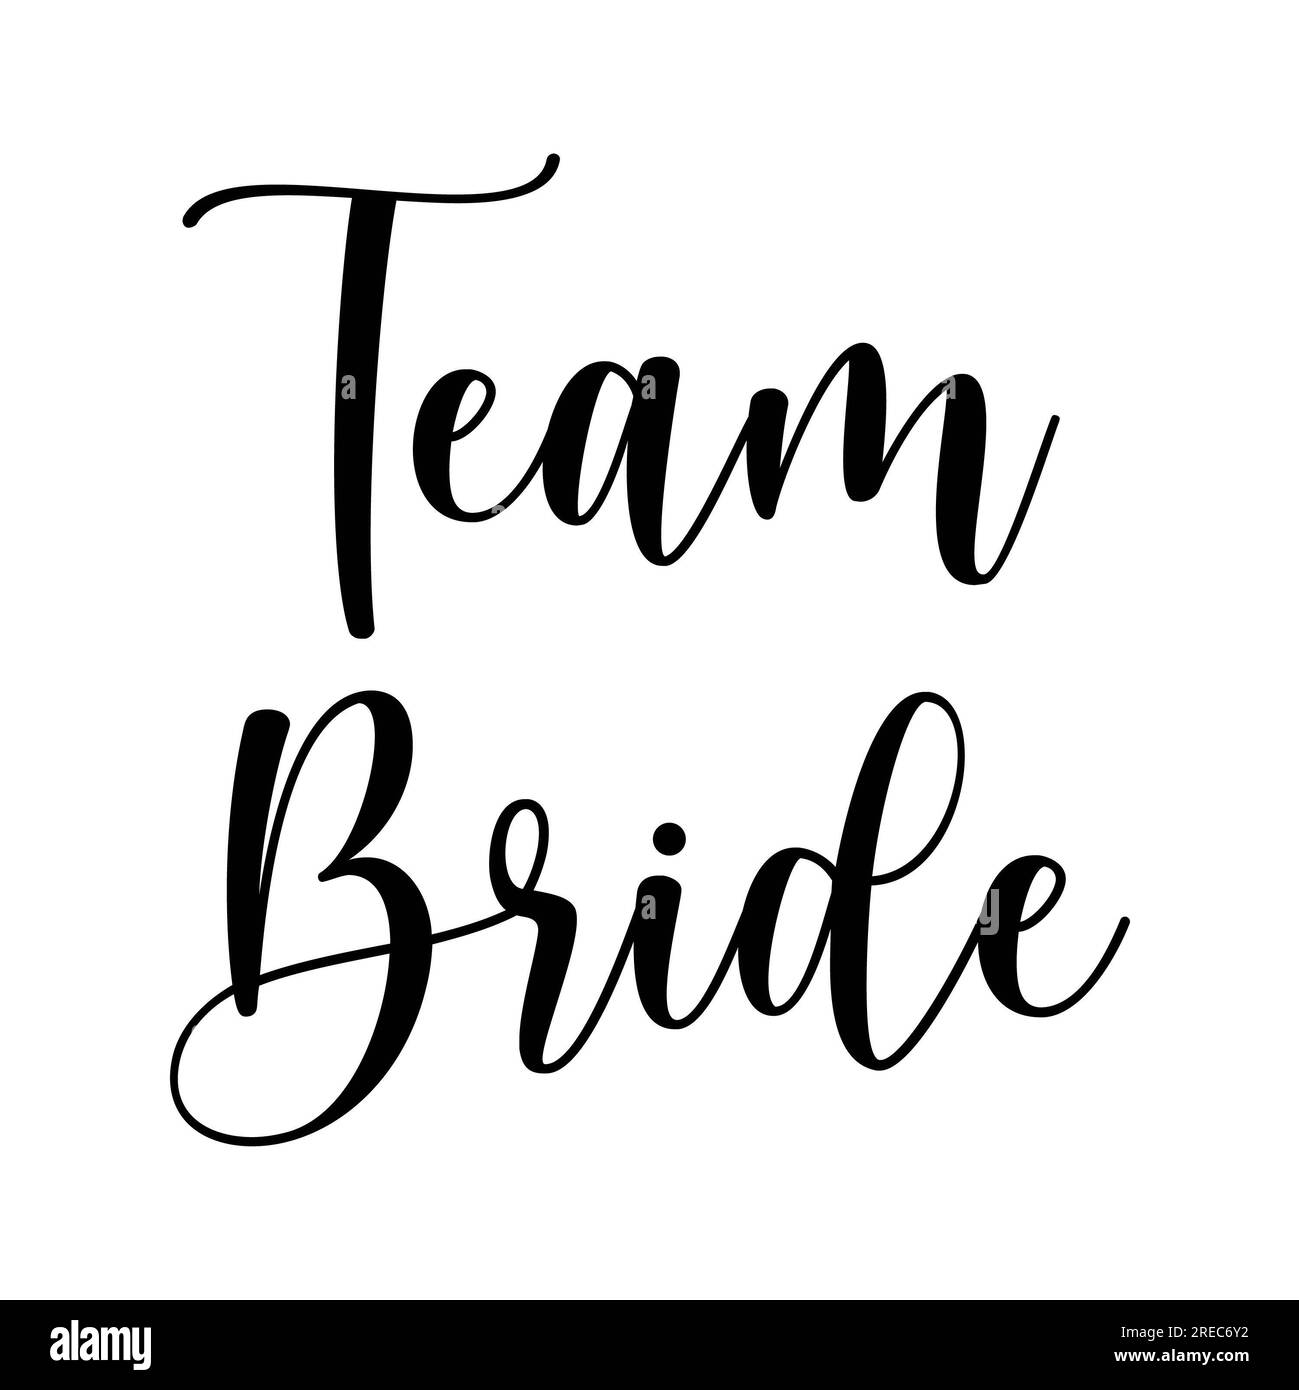 Team Bride on white background. Isolated illustration Stock Photo